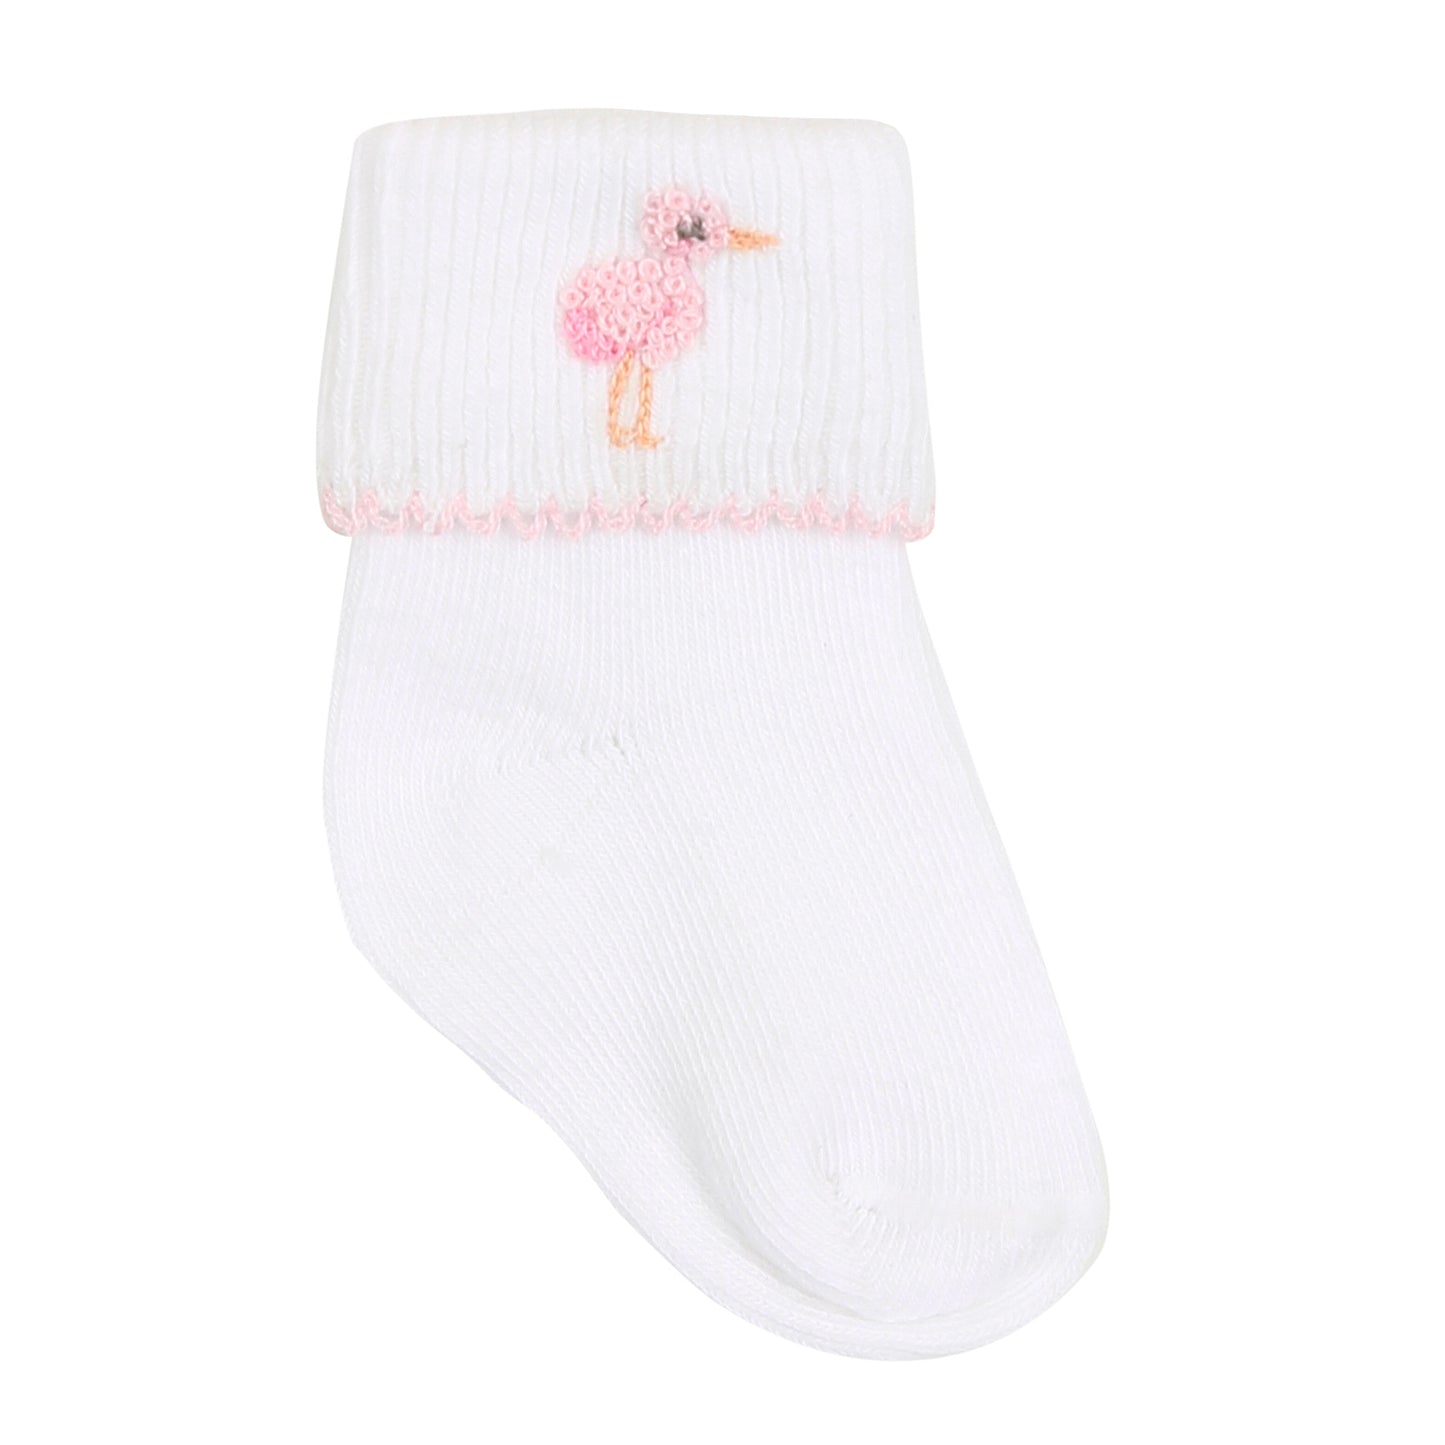 Tiny Stork Embroidered Socks